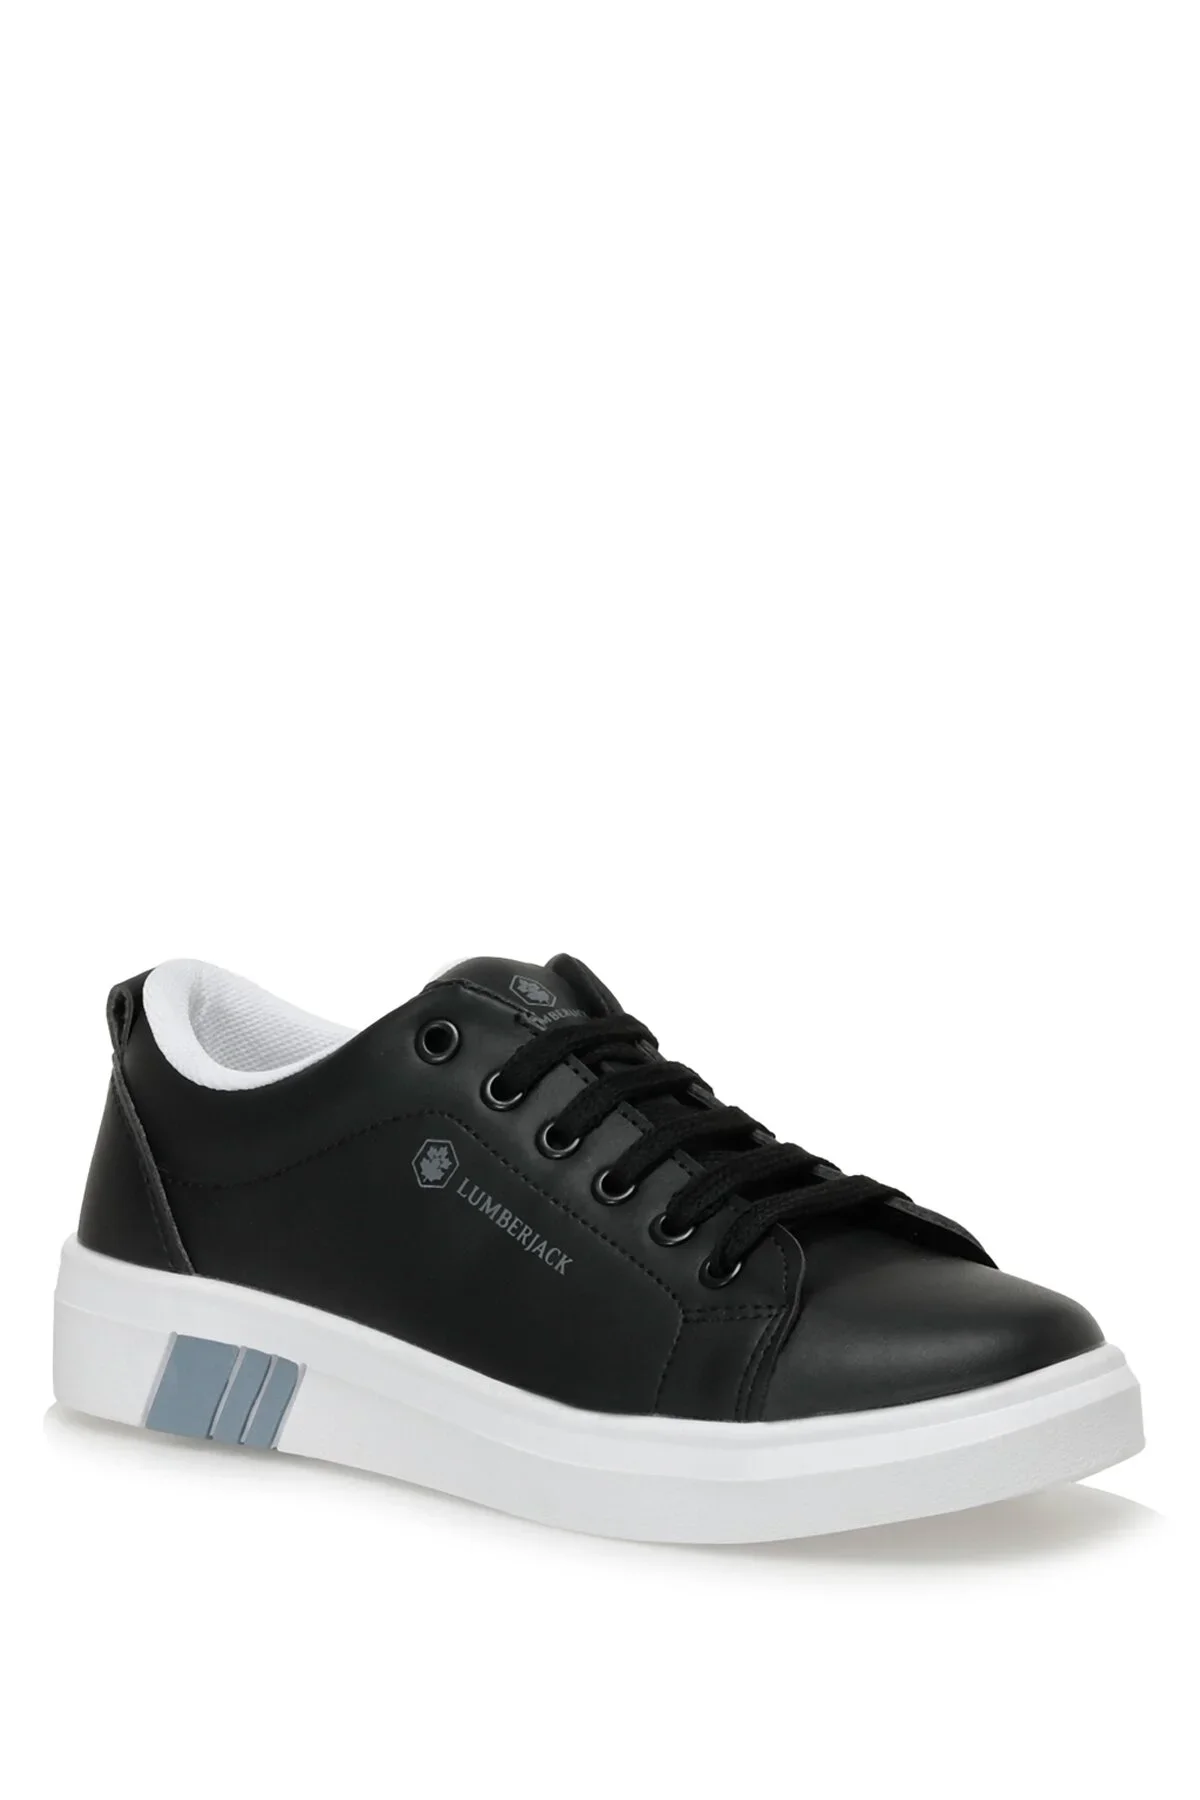 TINA 3FX Kadın Sneaker Spor Ayakkabı-Siyah - 1